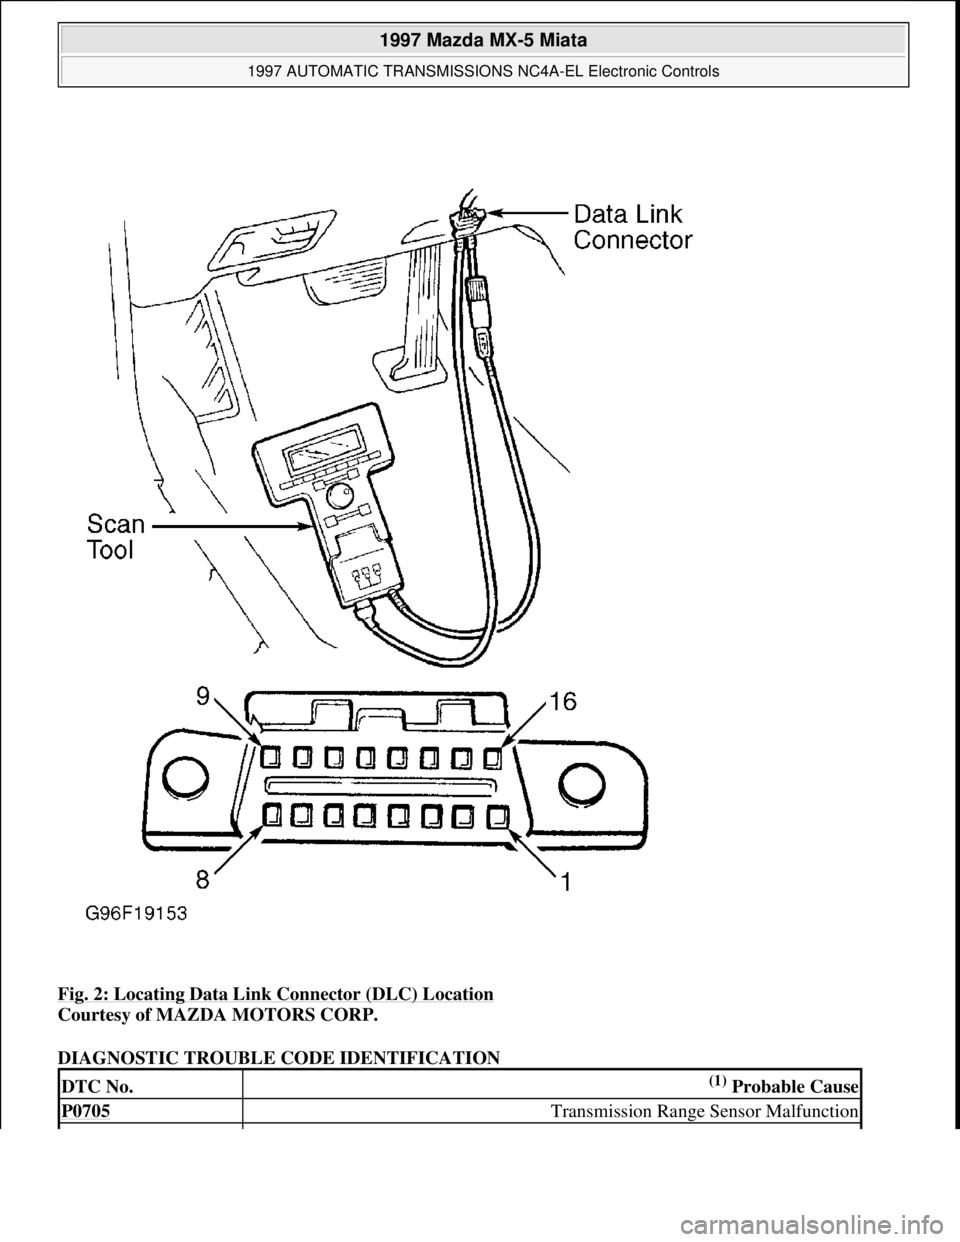 MAZDA MIATA 1997  Factory Repair Manual Fig. 2: Locating Data Link Connector (DLC) Location 
Courtesy of MAZDA MOTORS CORP. 
DIAGNOSTIC TROUBLE CODE IDENTIFICATION 
DTC No.(1) Probable Cause
P0705 Transmission Range Sensor Malfunction
 
199